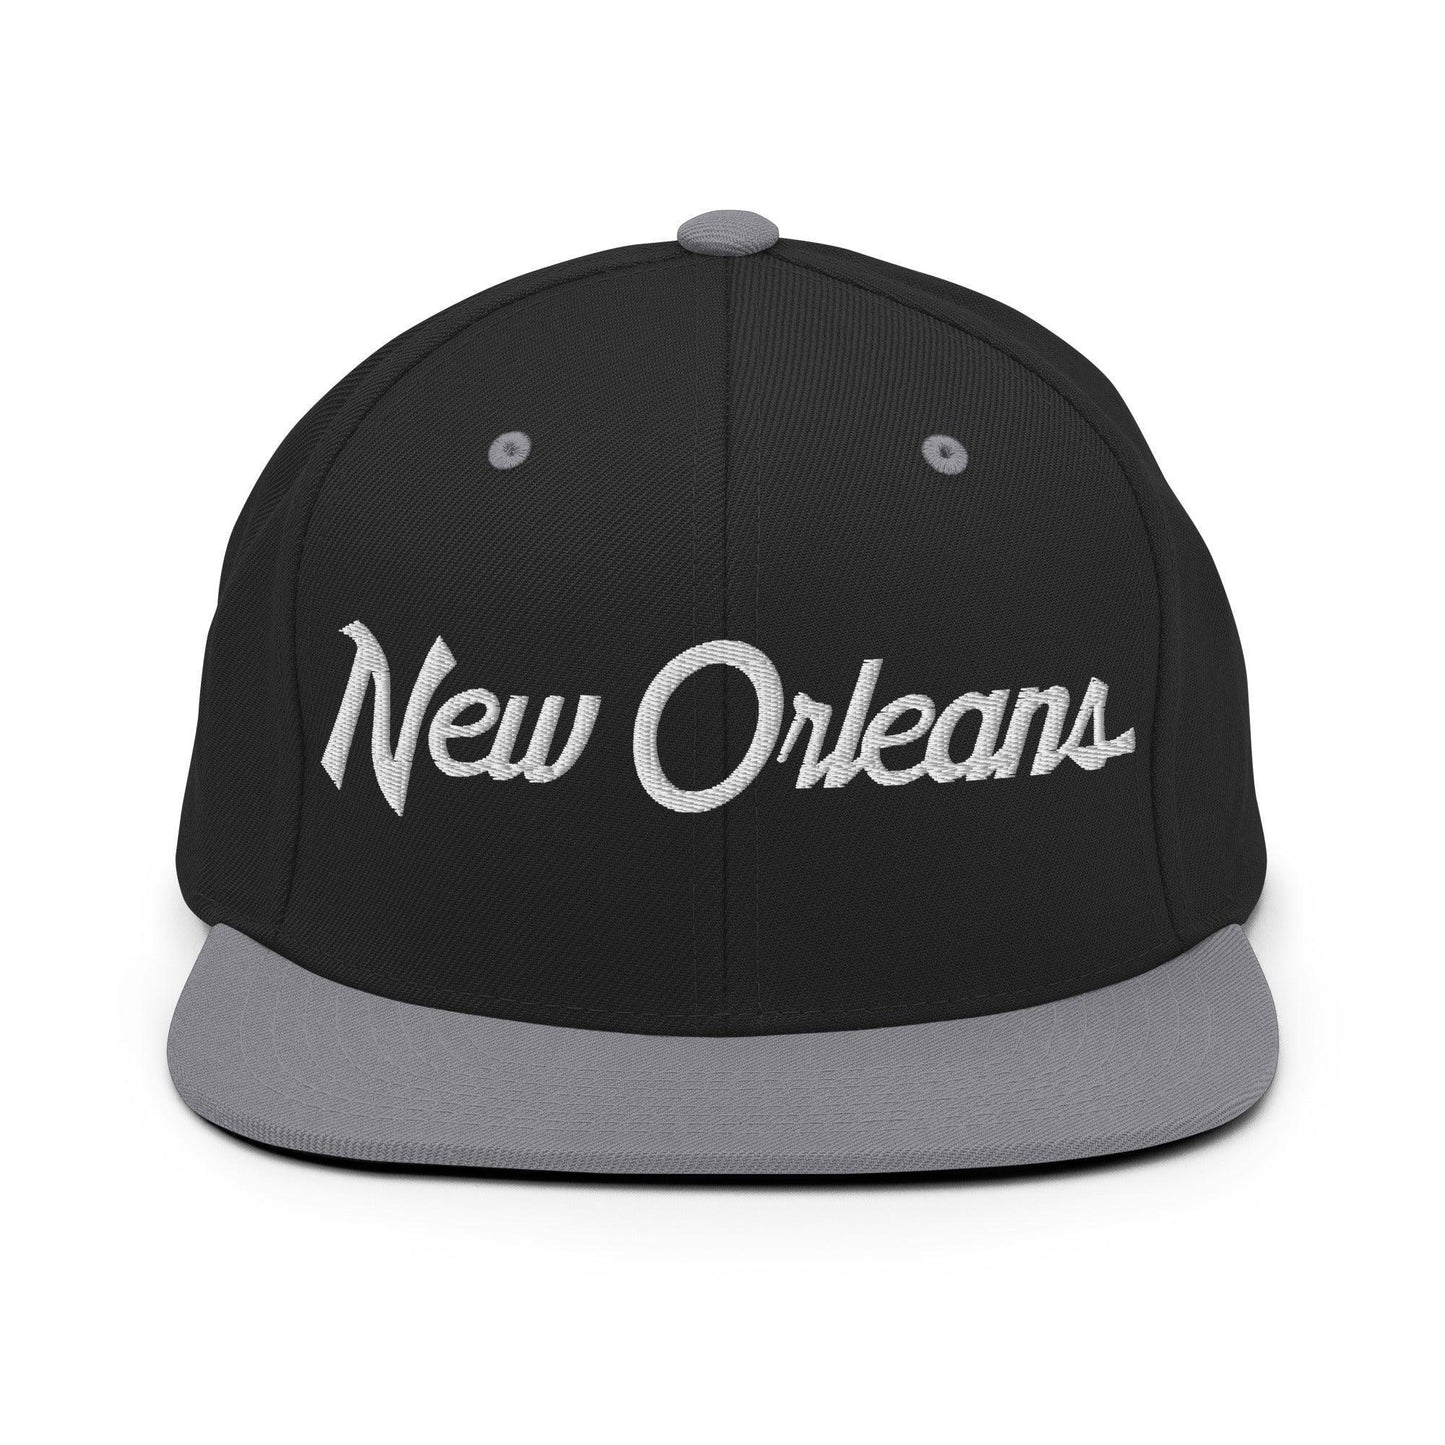 New Orleans Script Snapback Hat Black/ Silver